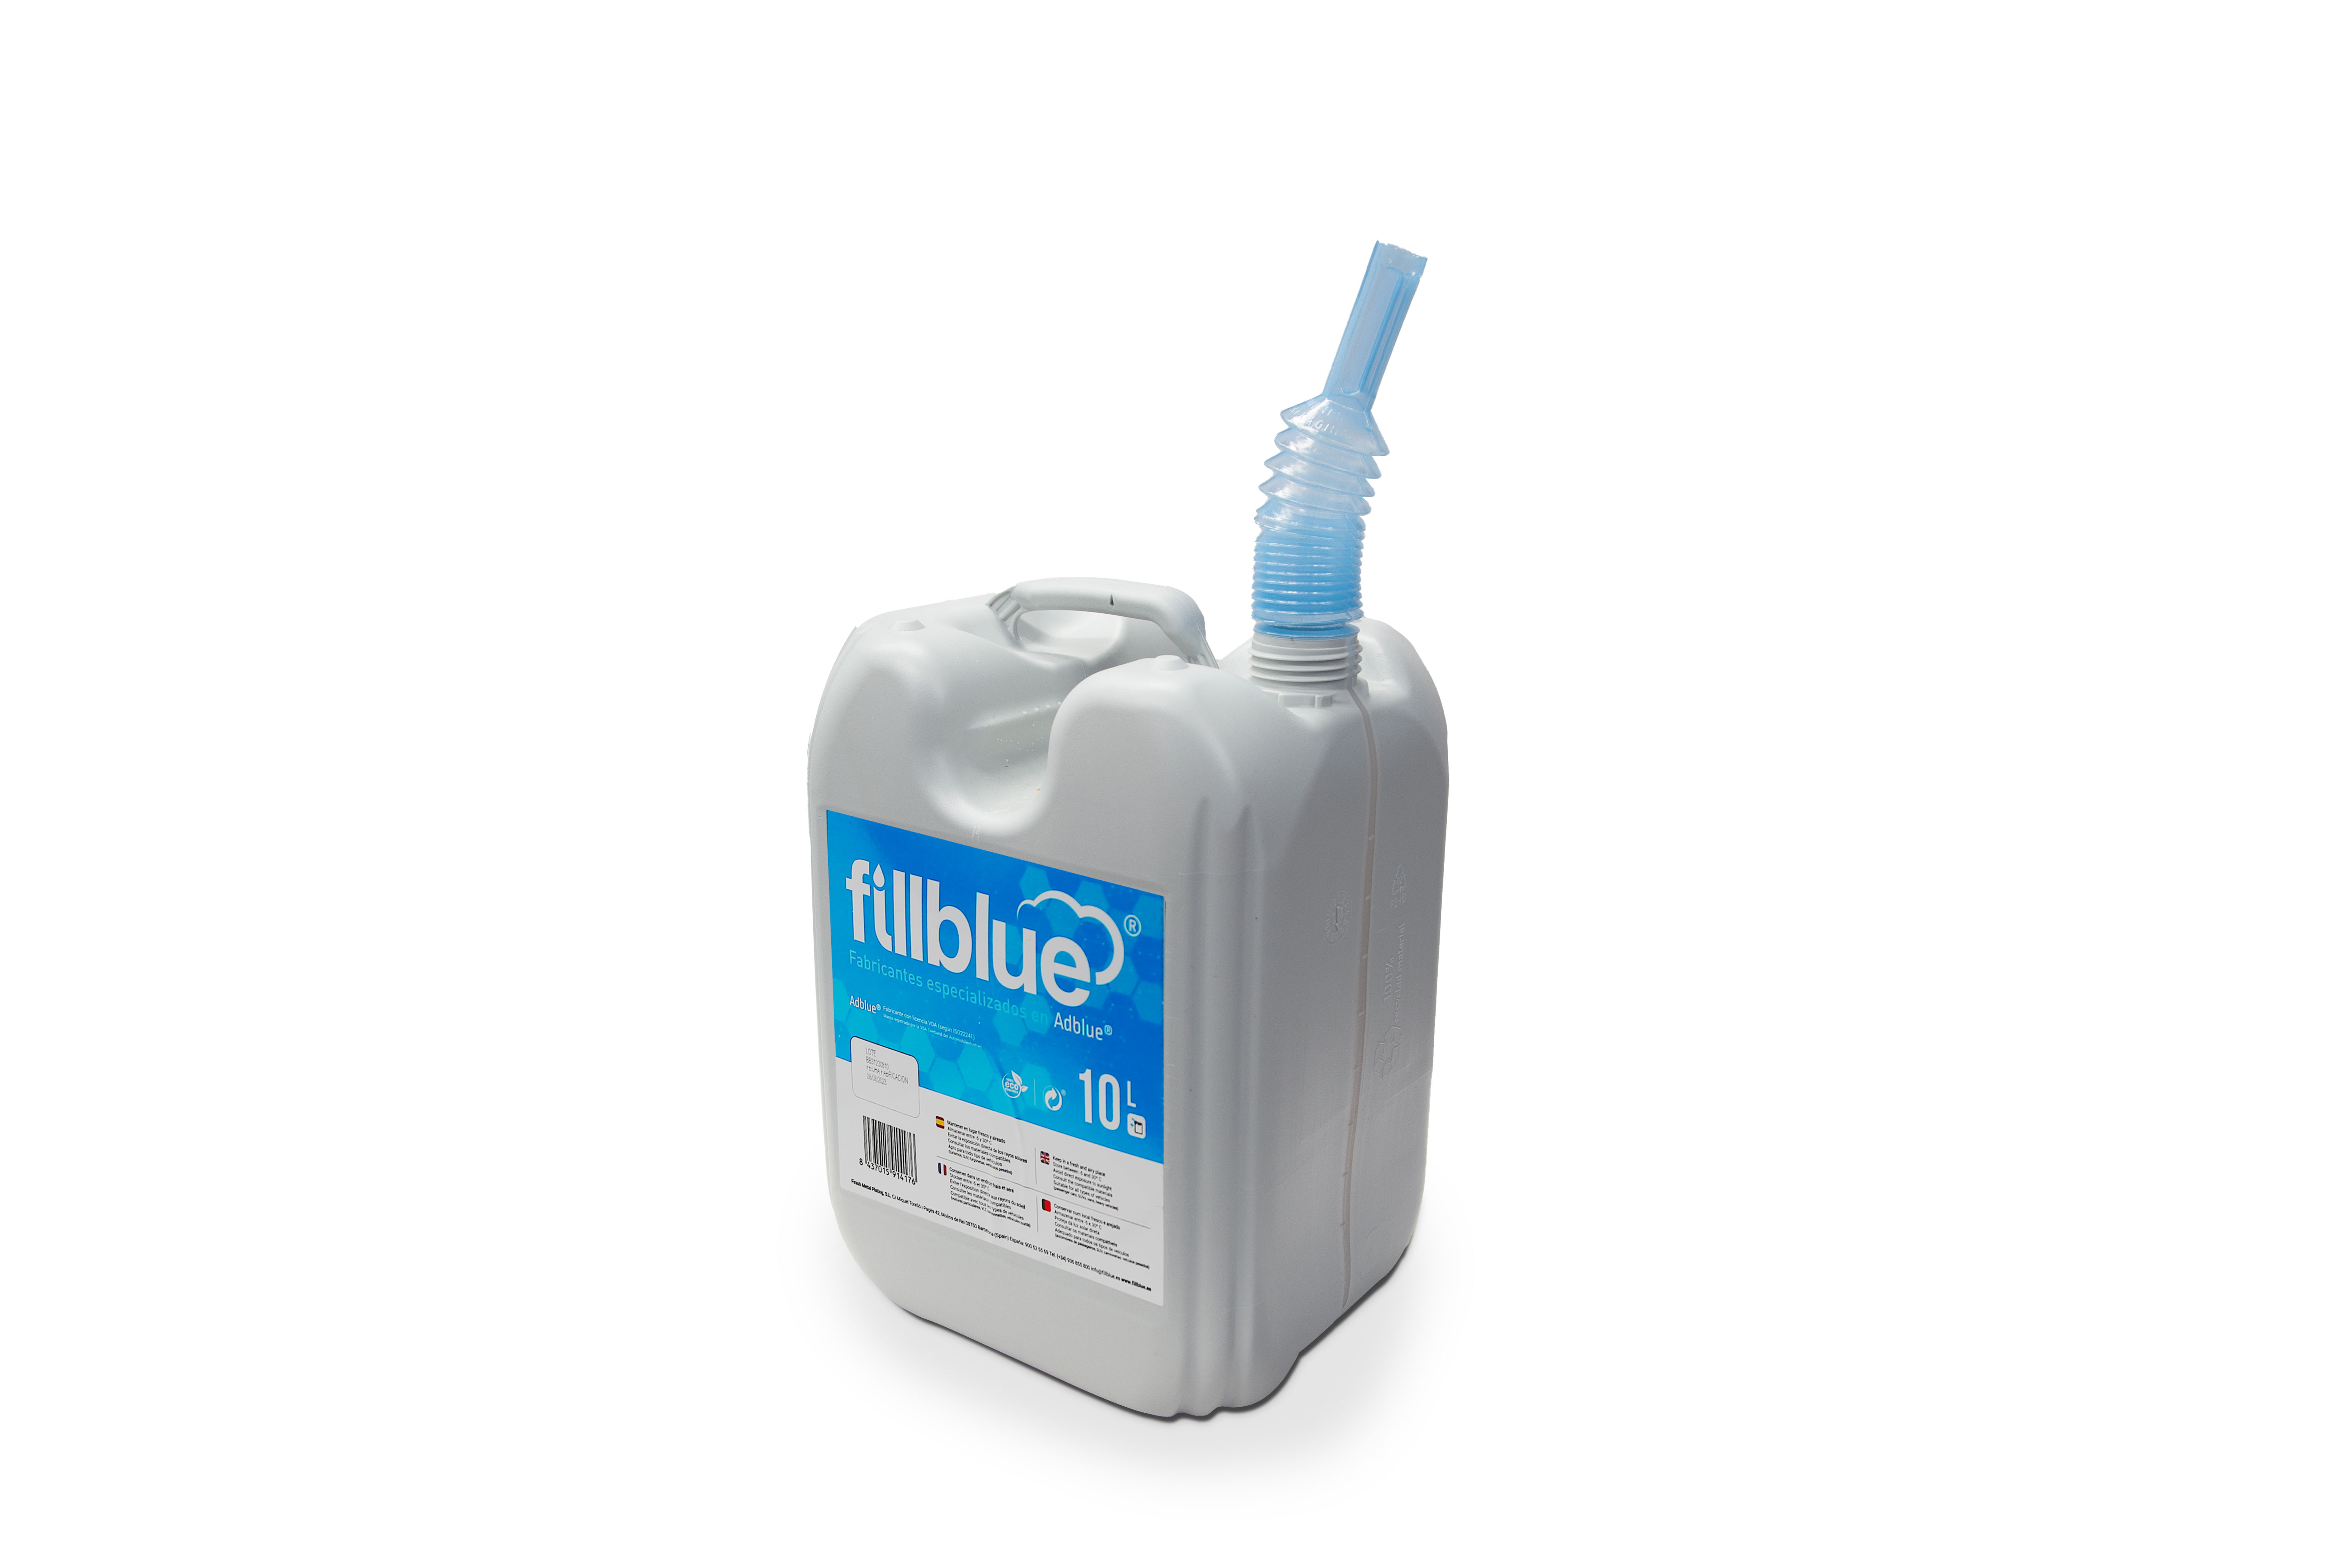 Aditivo AdBlue para diesel 10 litros